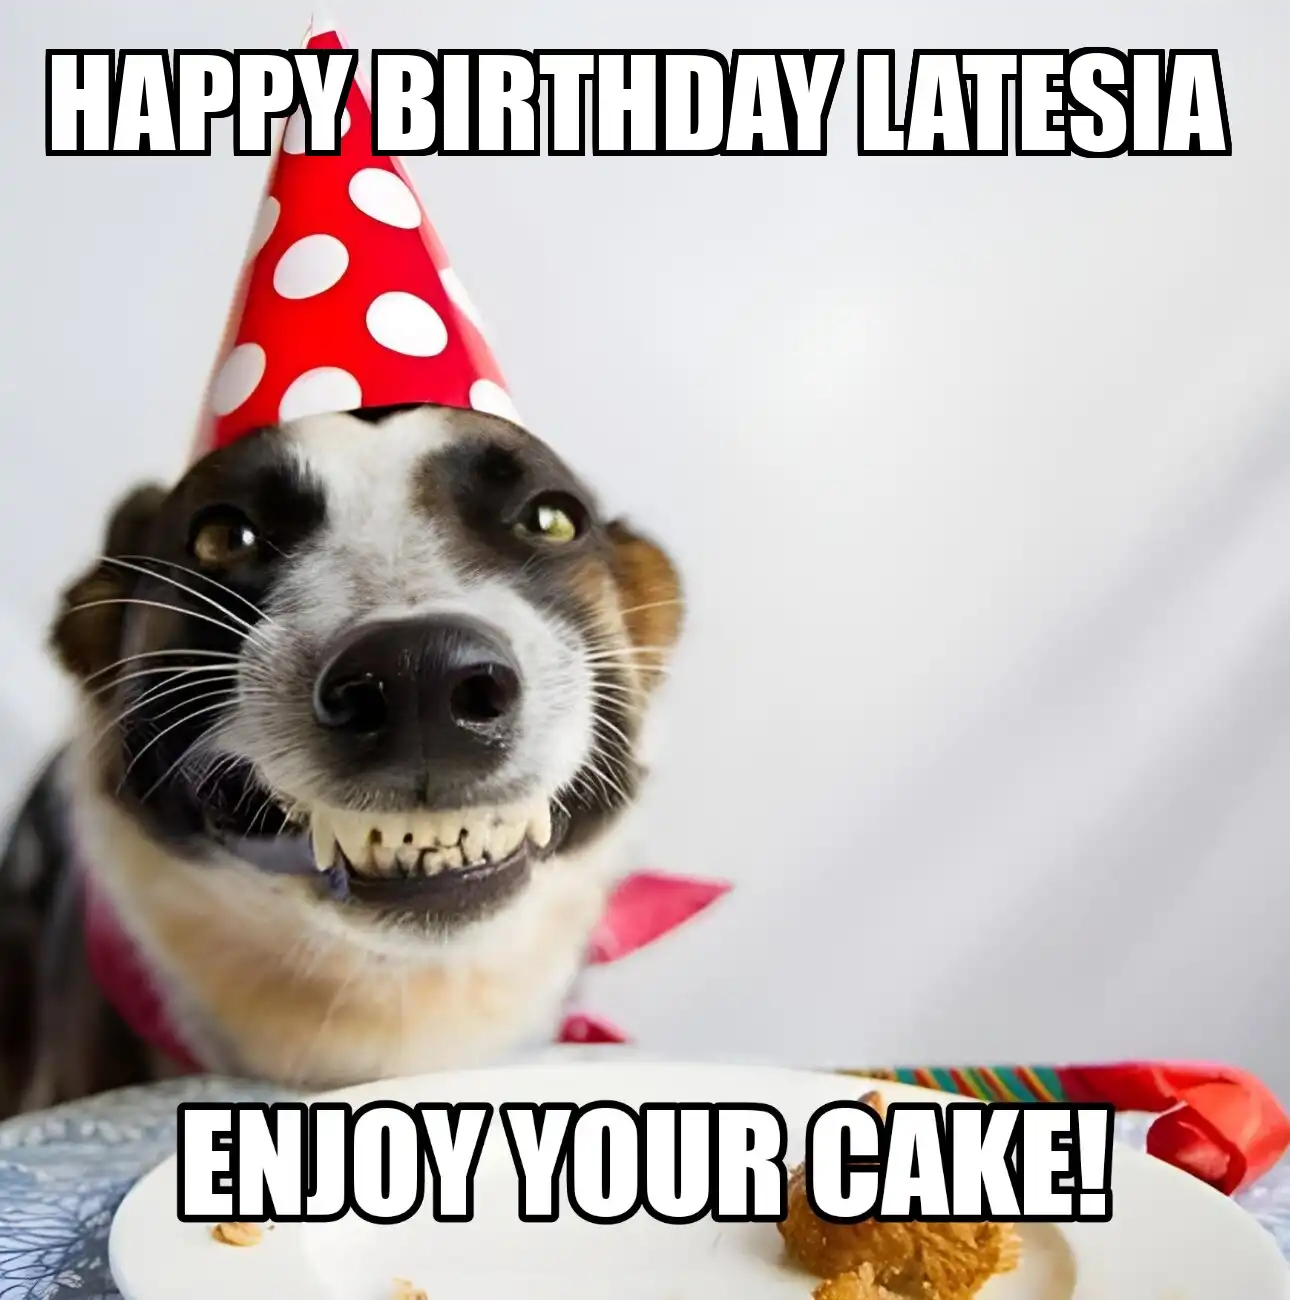 Happy Birthday Latesia Enjoy Your Cake Dog Meme